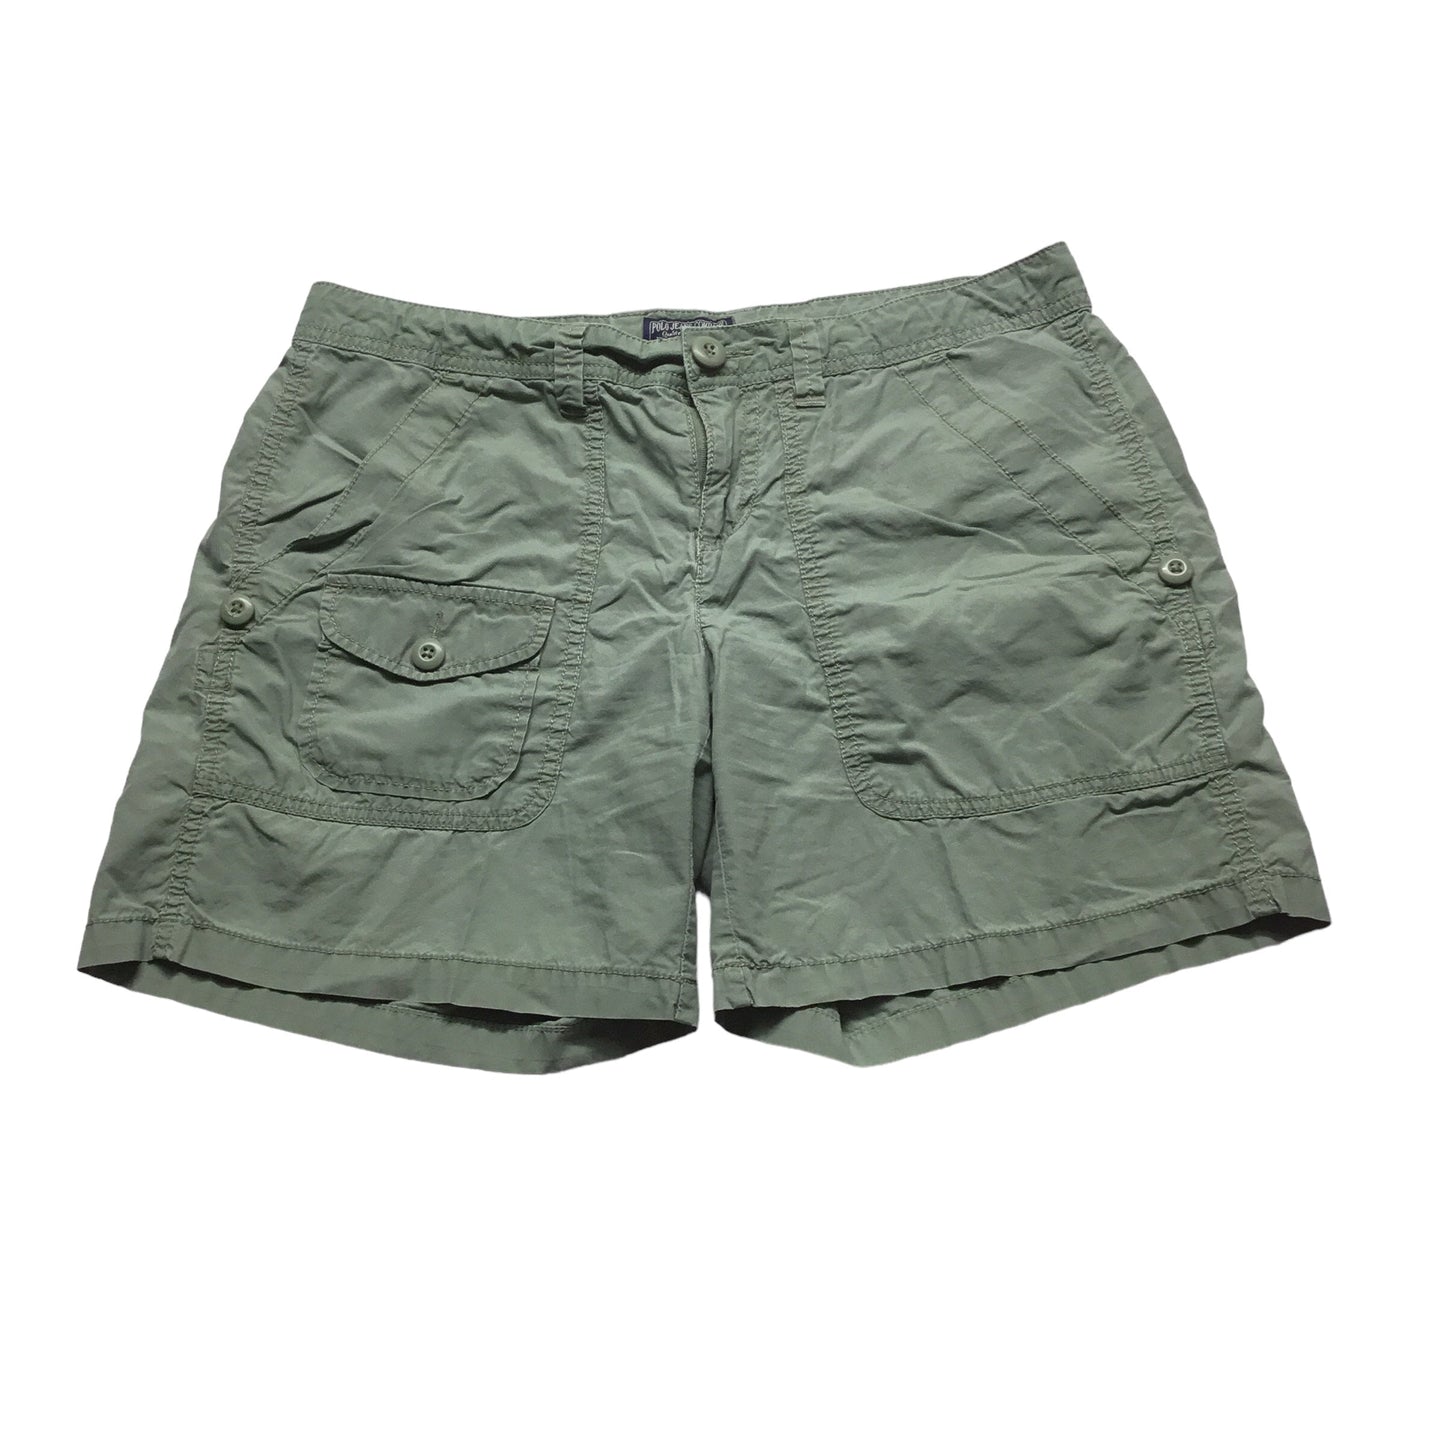 Green Shorts Polo Ralph Lauren, Size 8